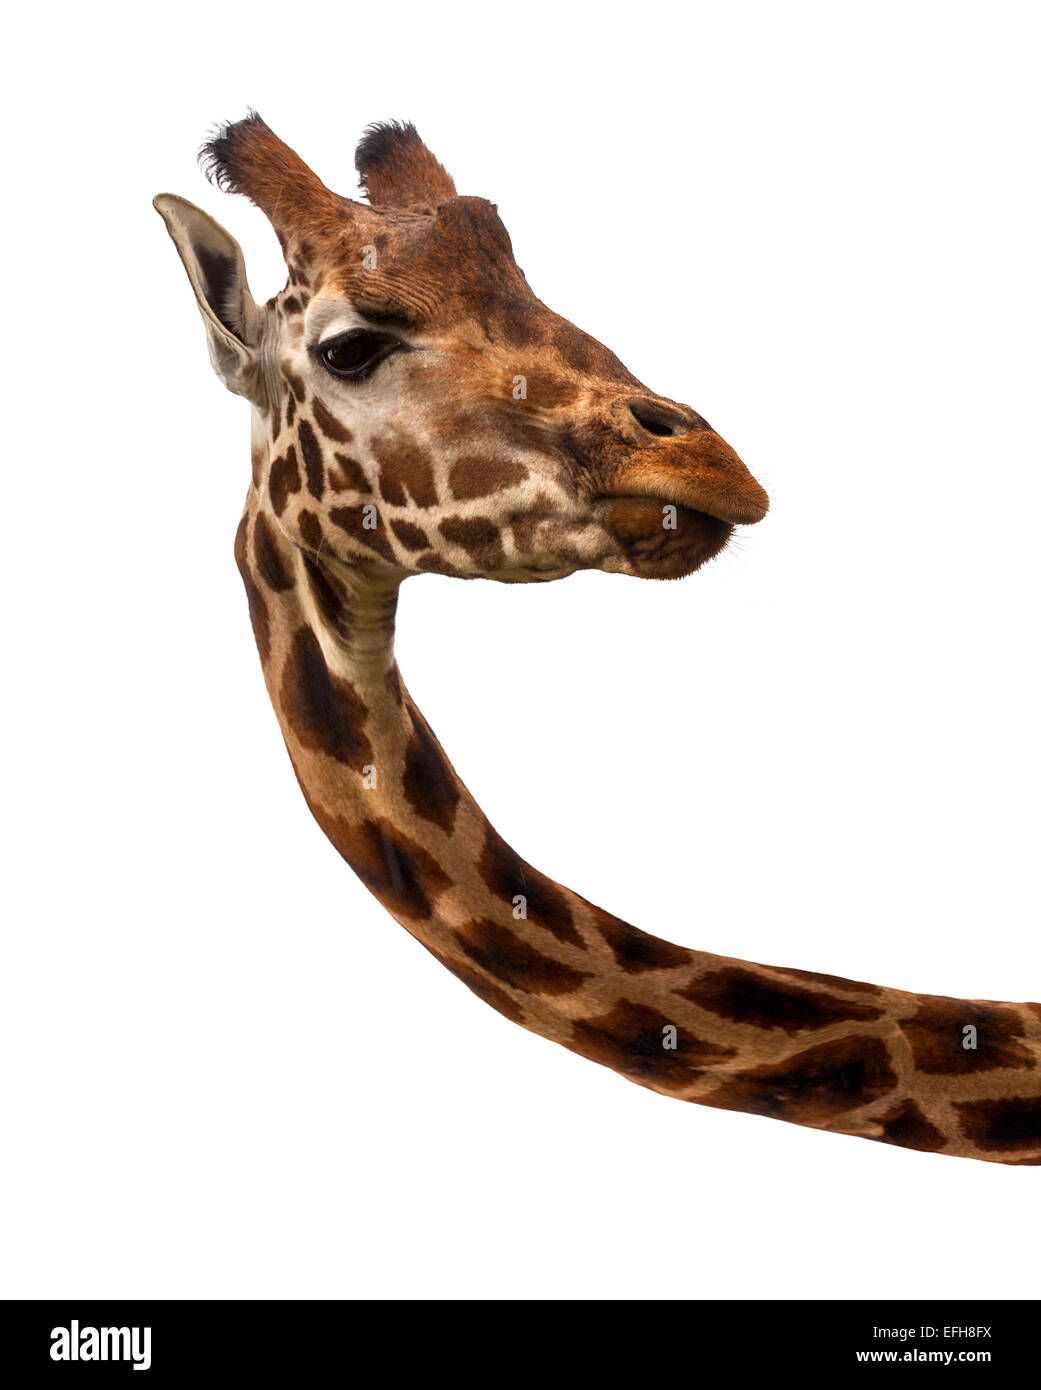 Giraffe head and neck against white background Stock Photo